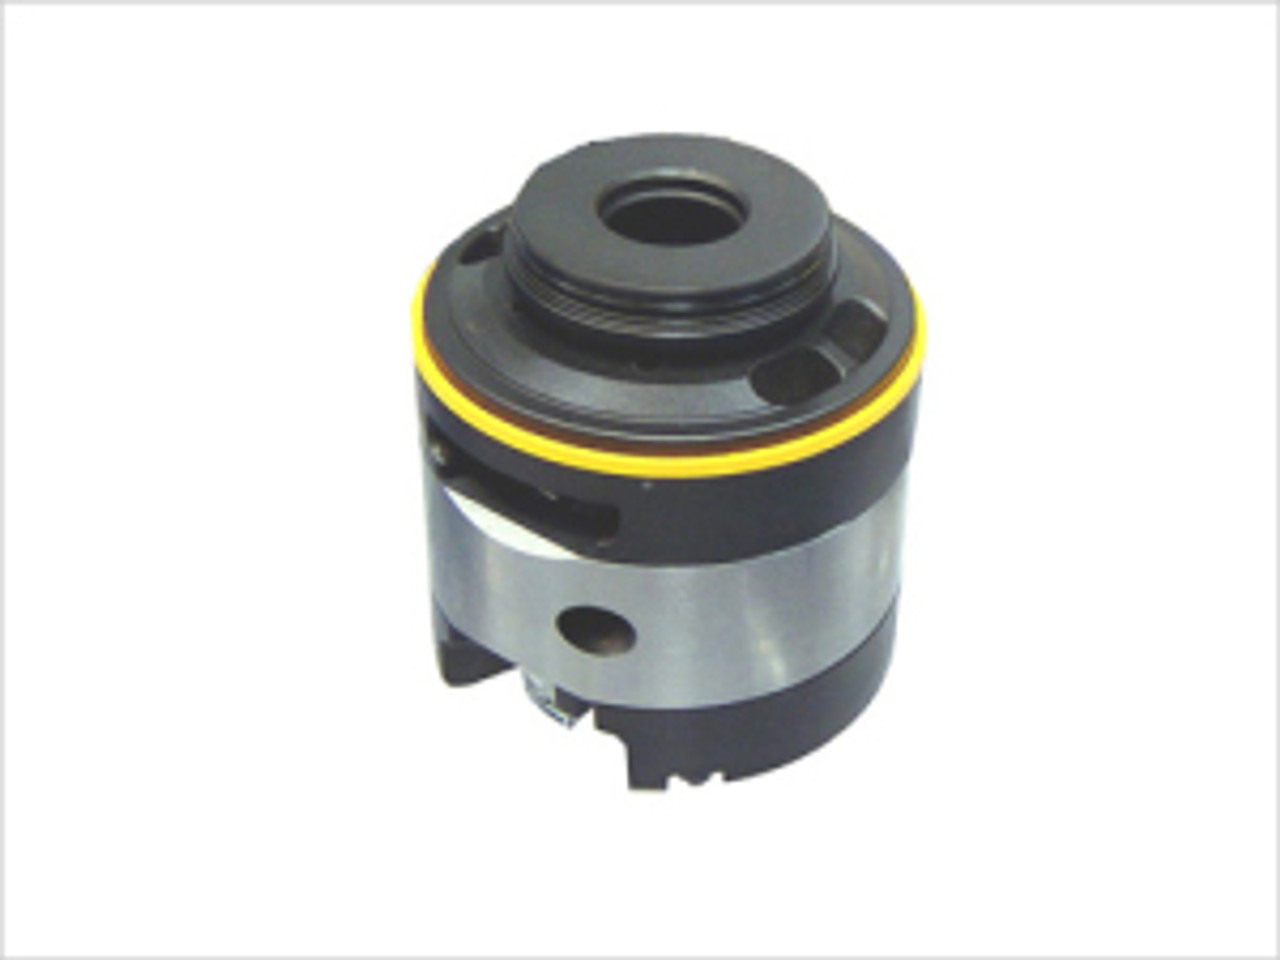 421574 Vickers hydraulic vane pump replacement cartridge kit 25VQ 21 GPM 